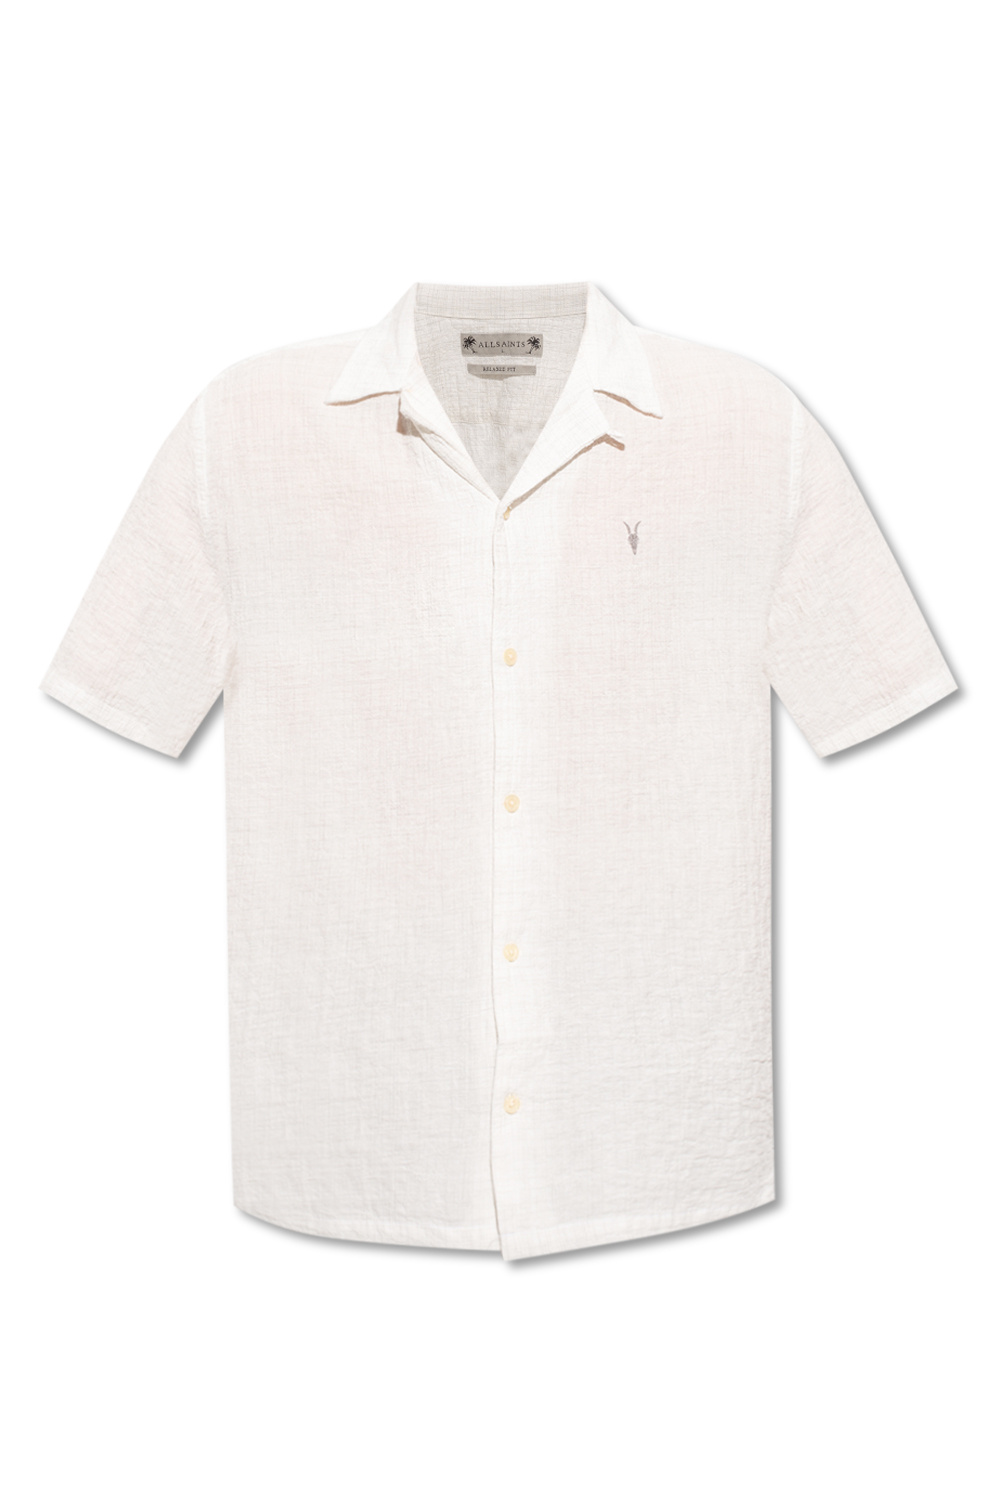 AllSaints ‘Mattole’ shirt | Men's Clothing | Vitkac